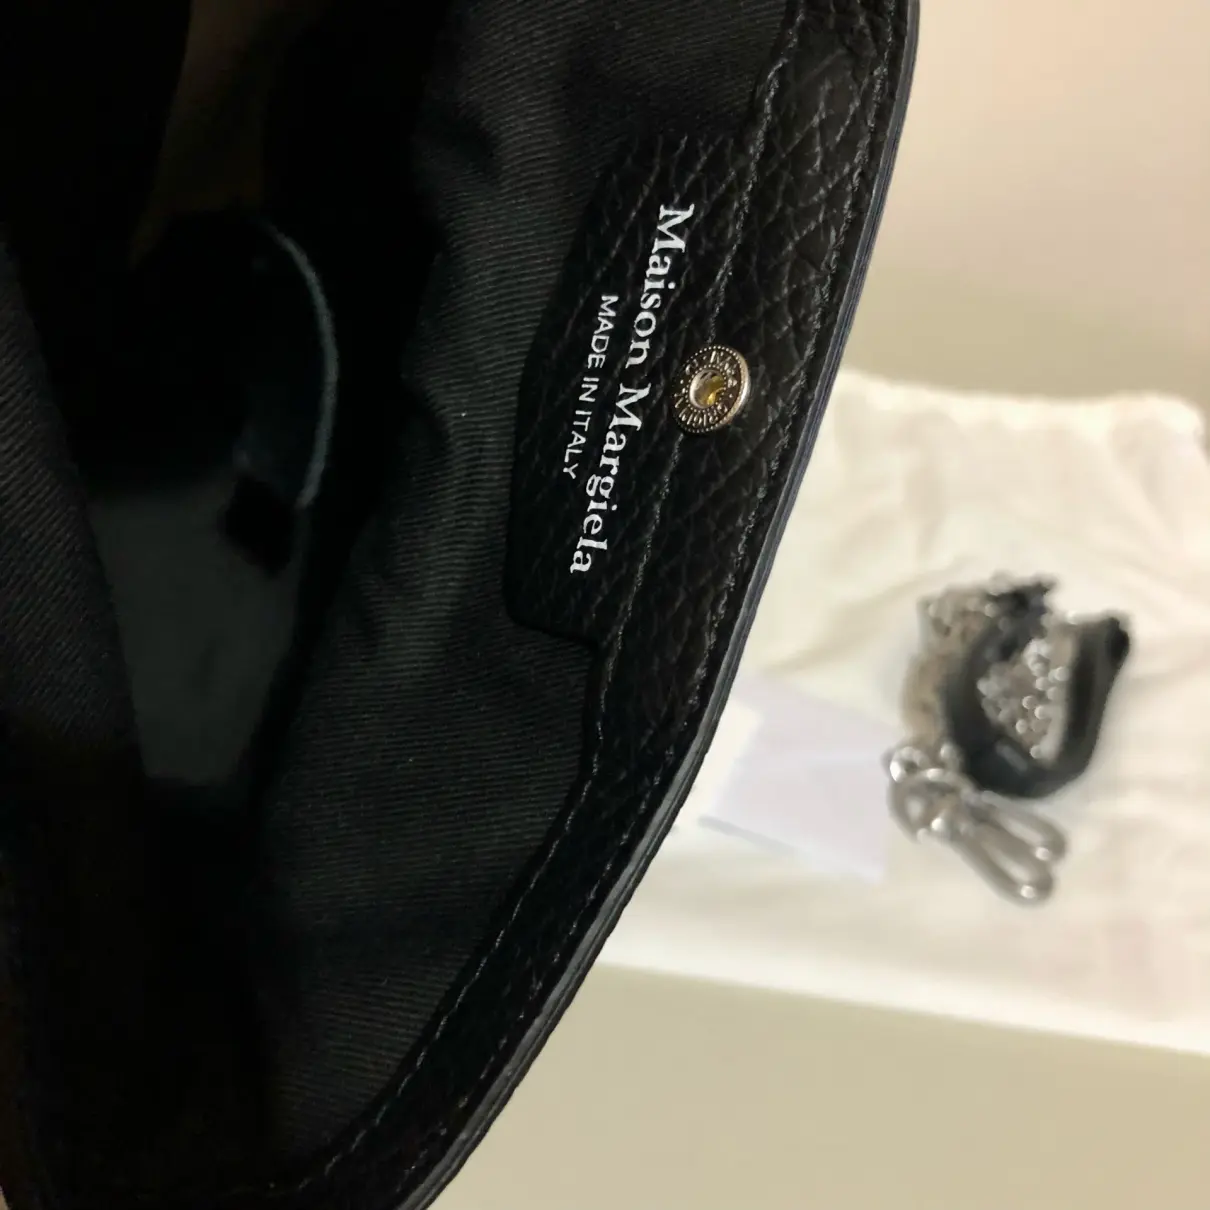 5AC leather handbag Maison Martin Margiela